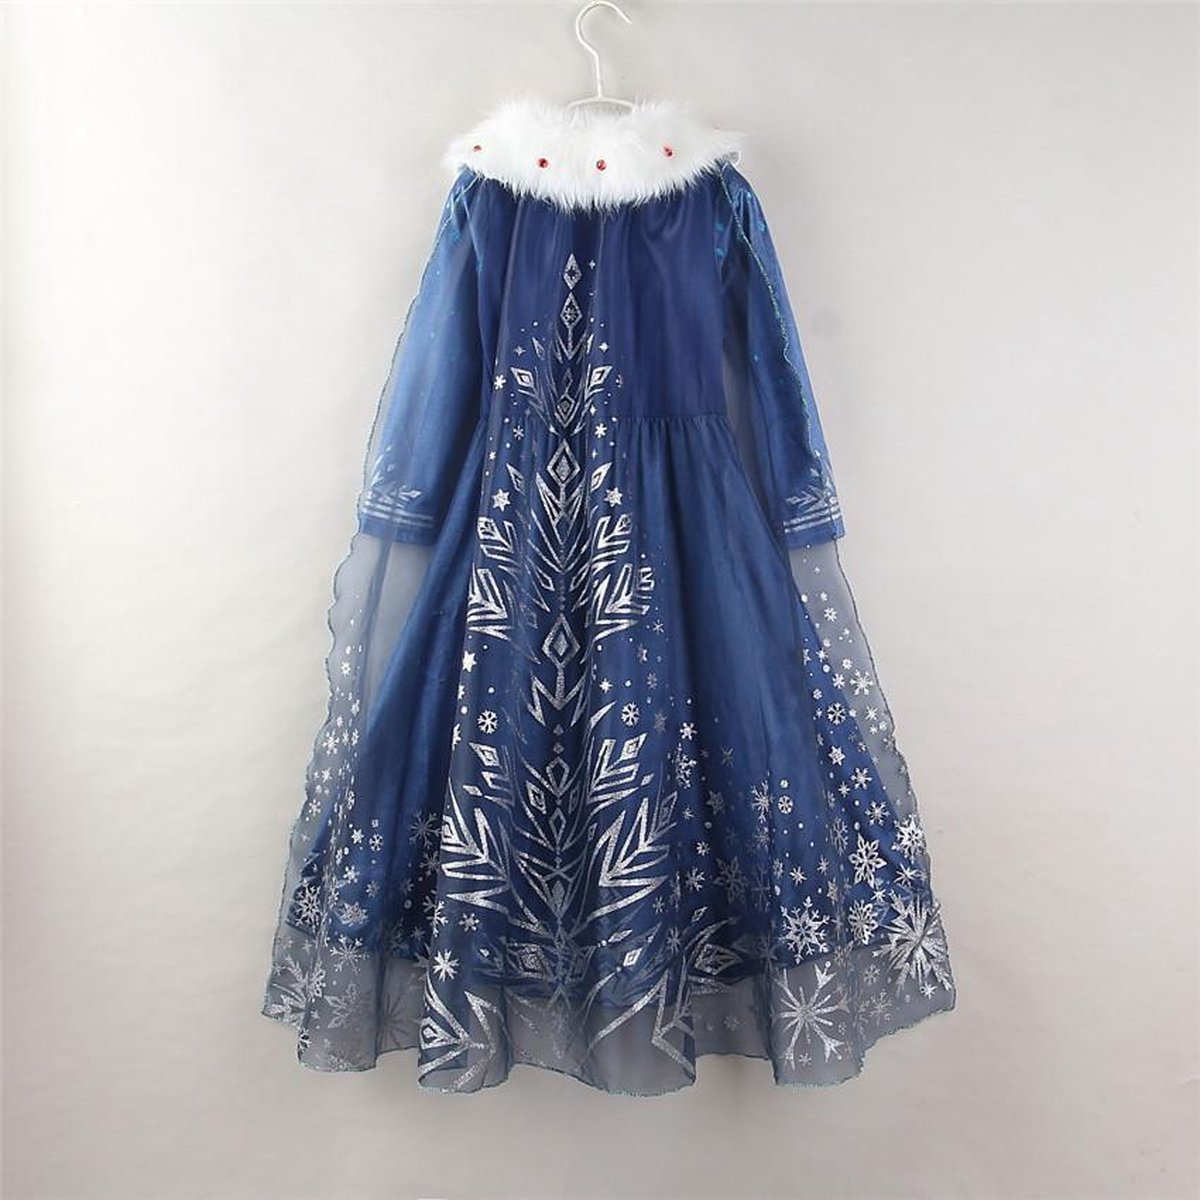 Verkleedkleding - Elsa jurk - met accessoires - Merkloos